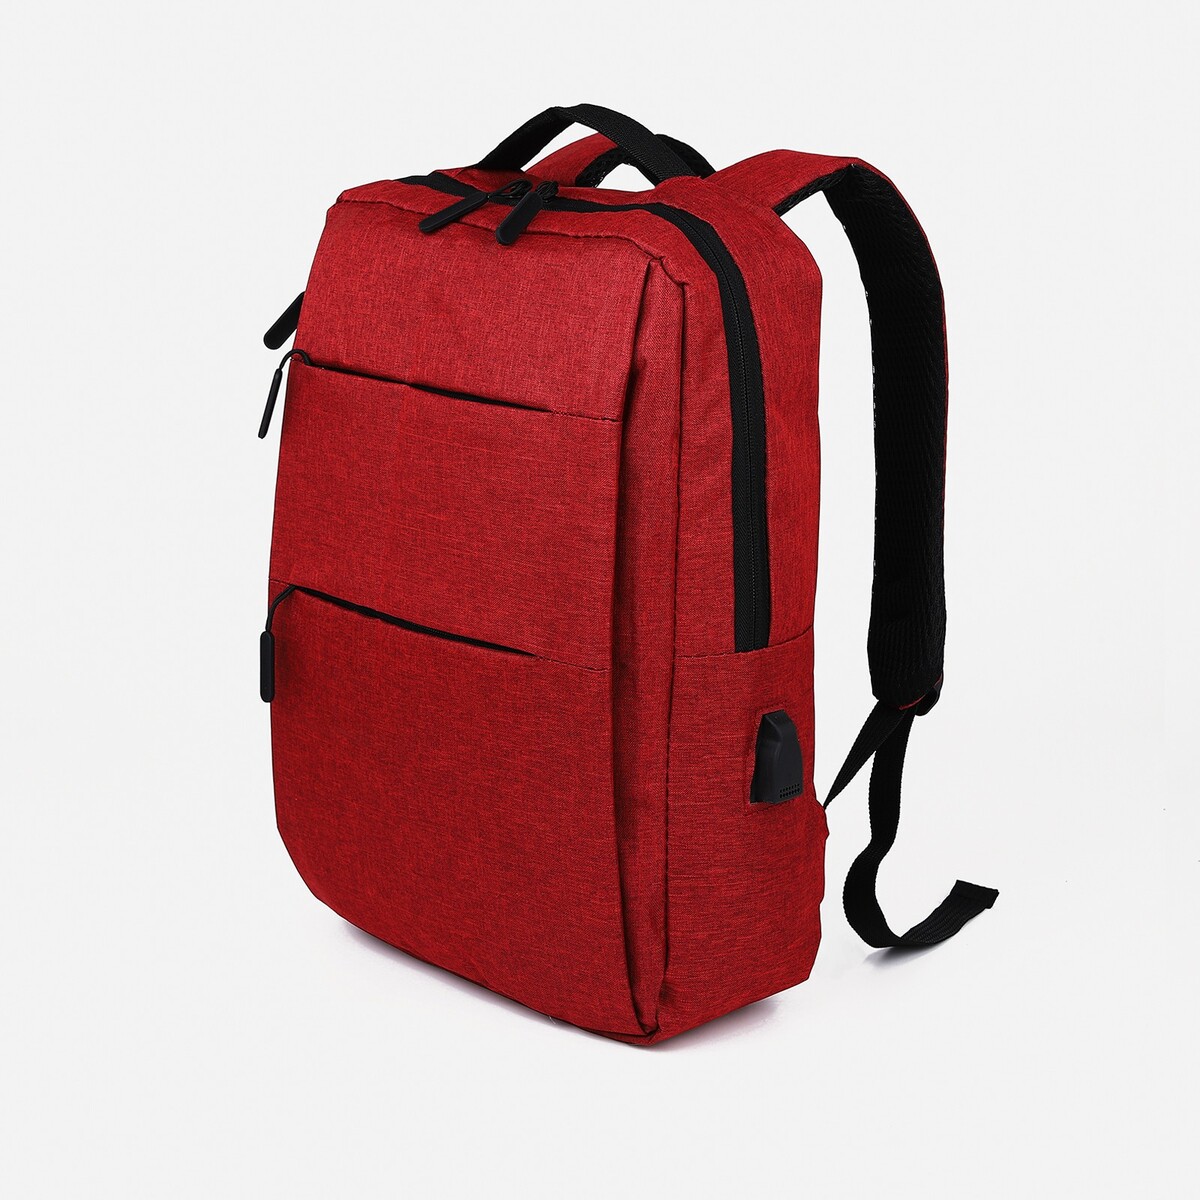 Рюкзак мужской на молнии, 4 наружных кармана, с usb, цвет бордовый рюкзак на молнии 2 наружных кармана бордовый